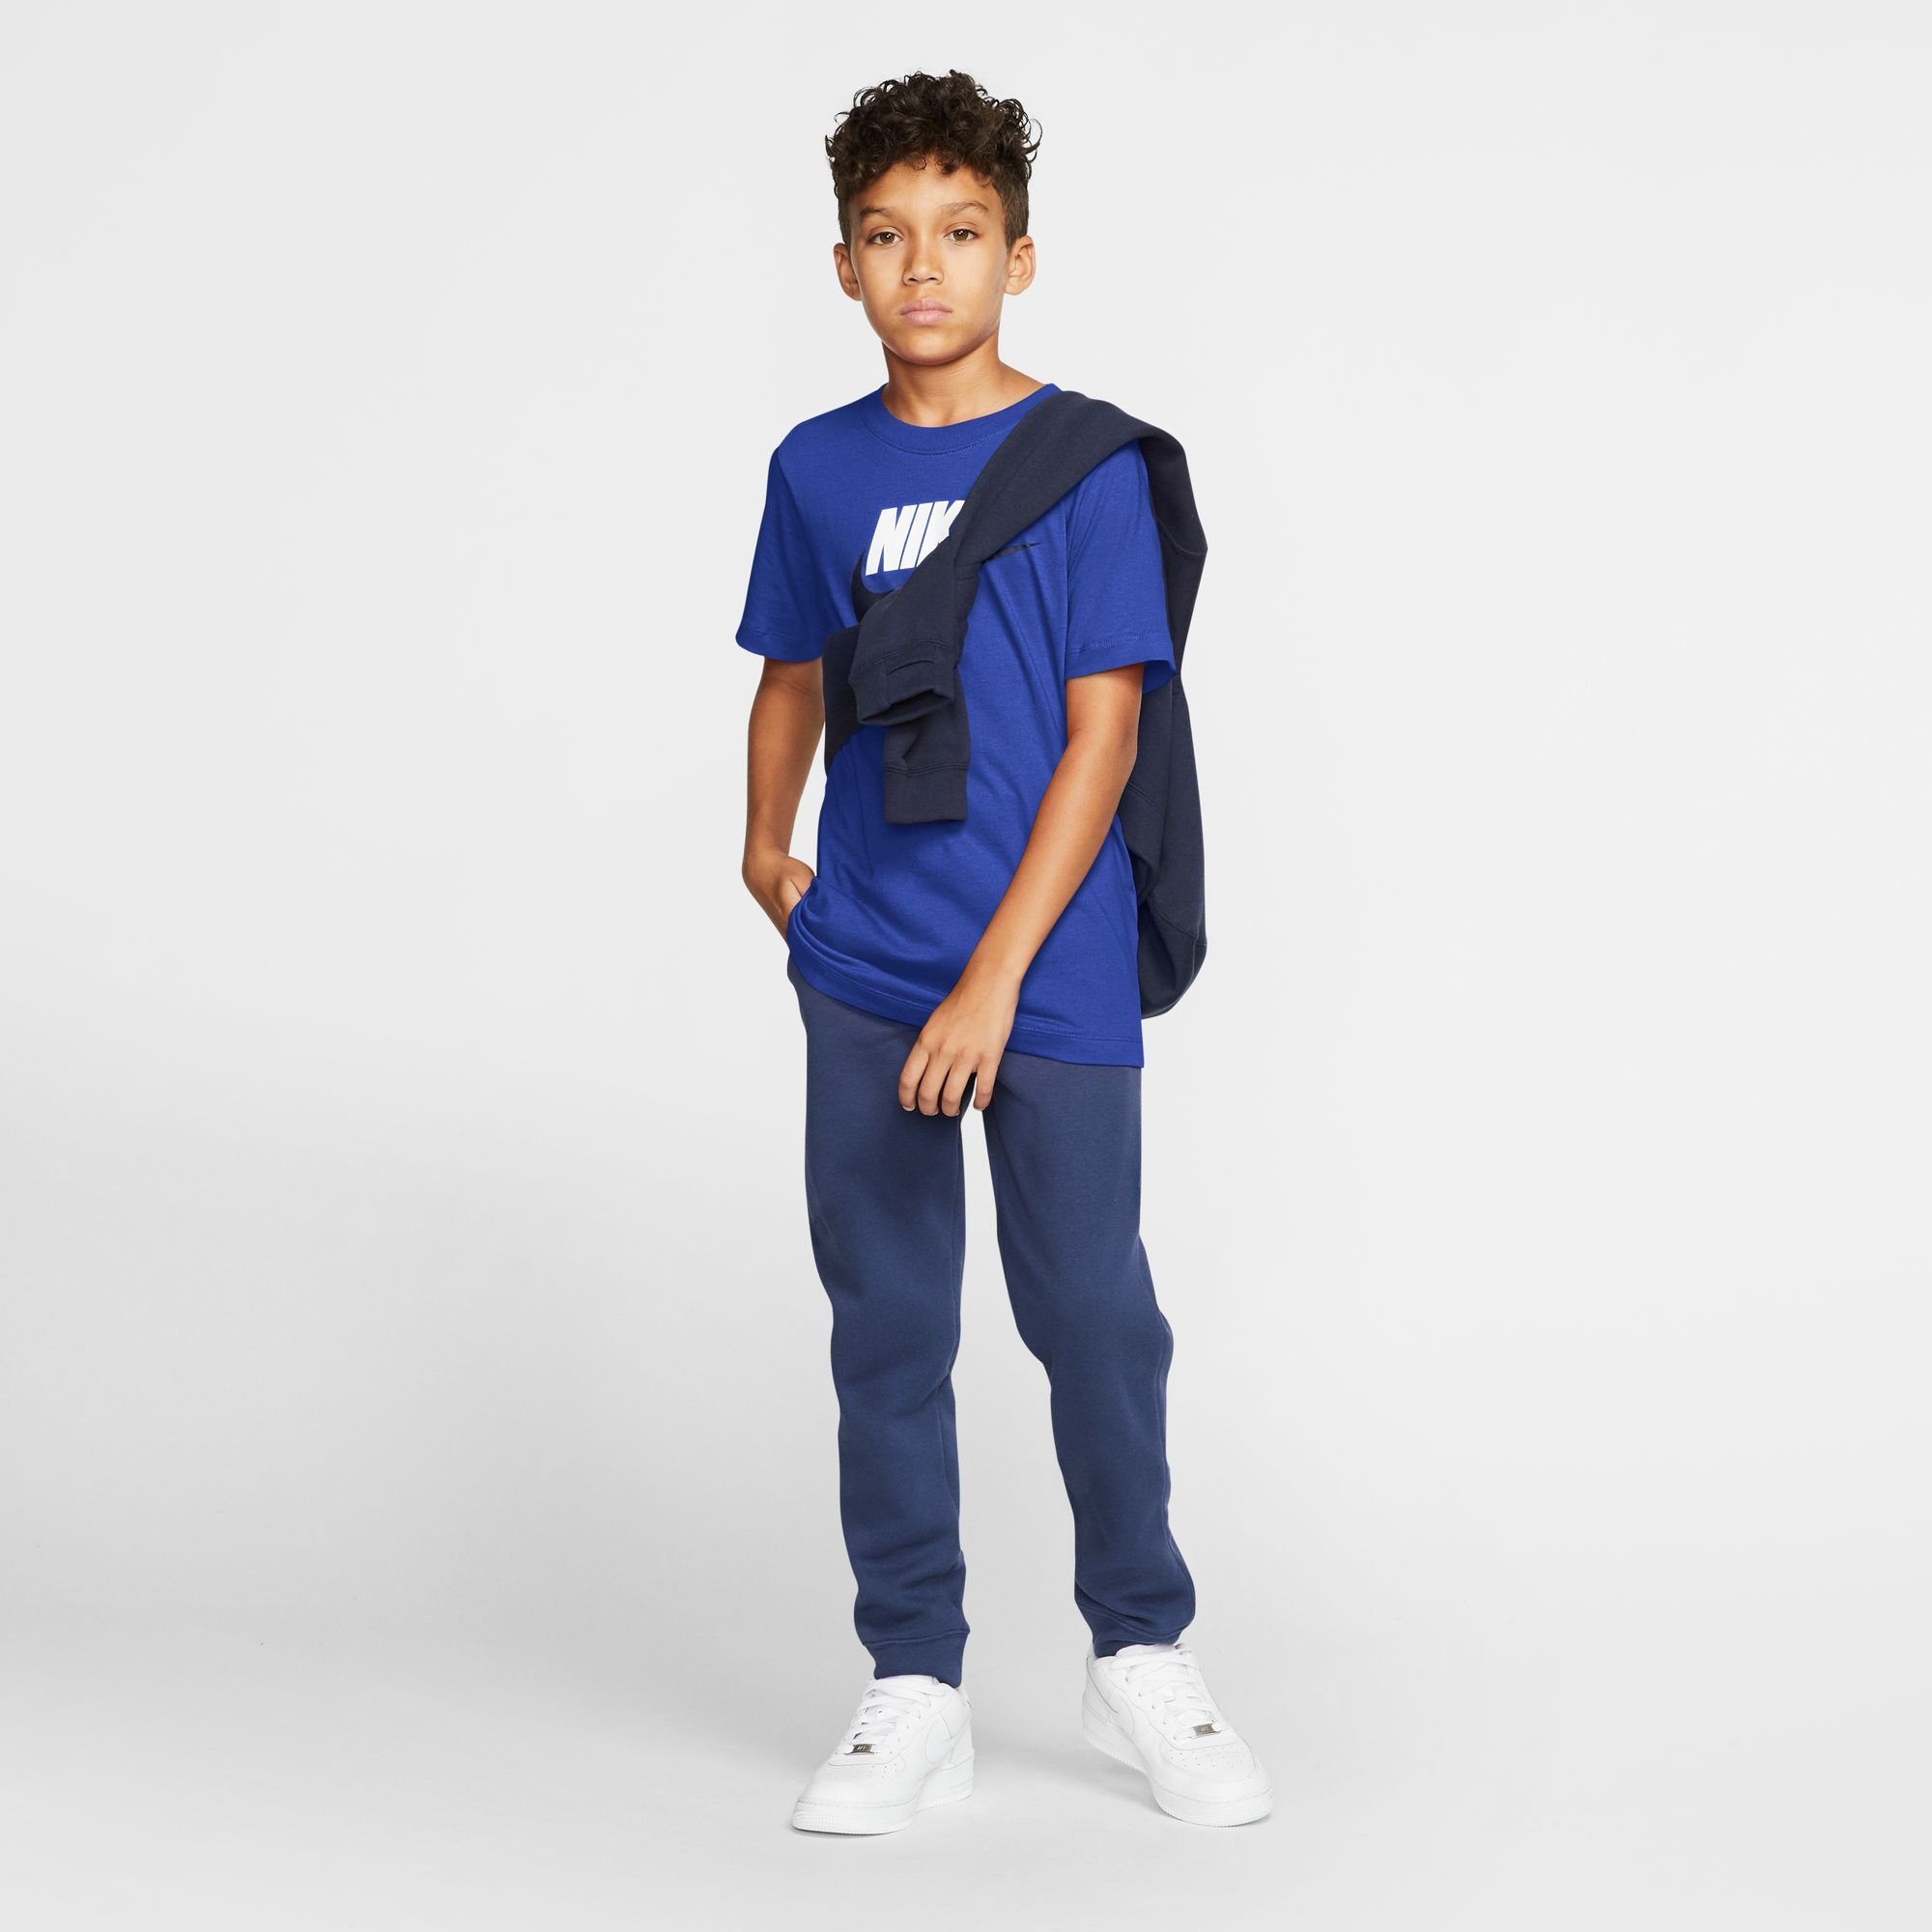 T-SHIRT NAVY GAME T-Shirt ROYAL/MIDNIGHT COTTON KIDS' Sportswear BIG Nike